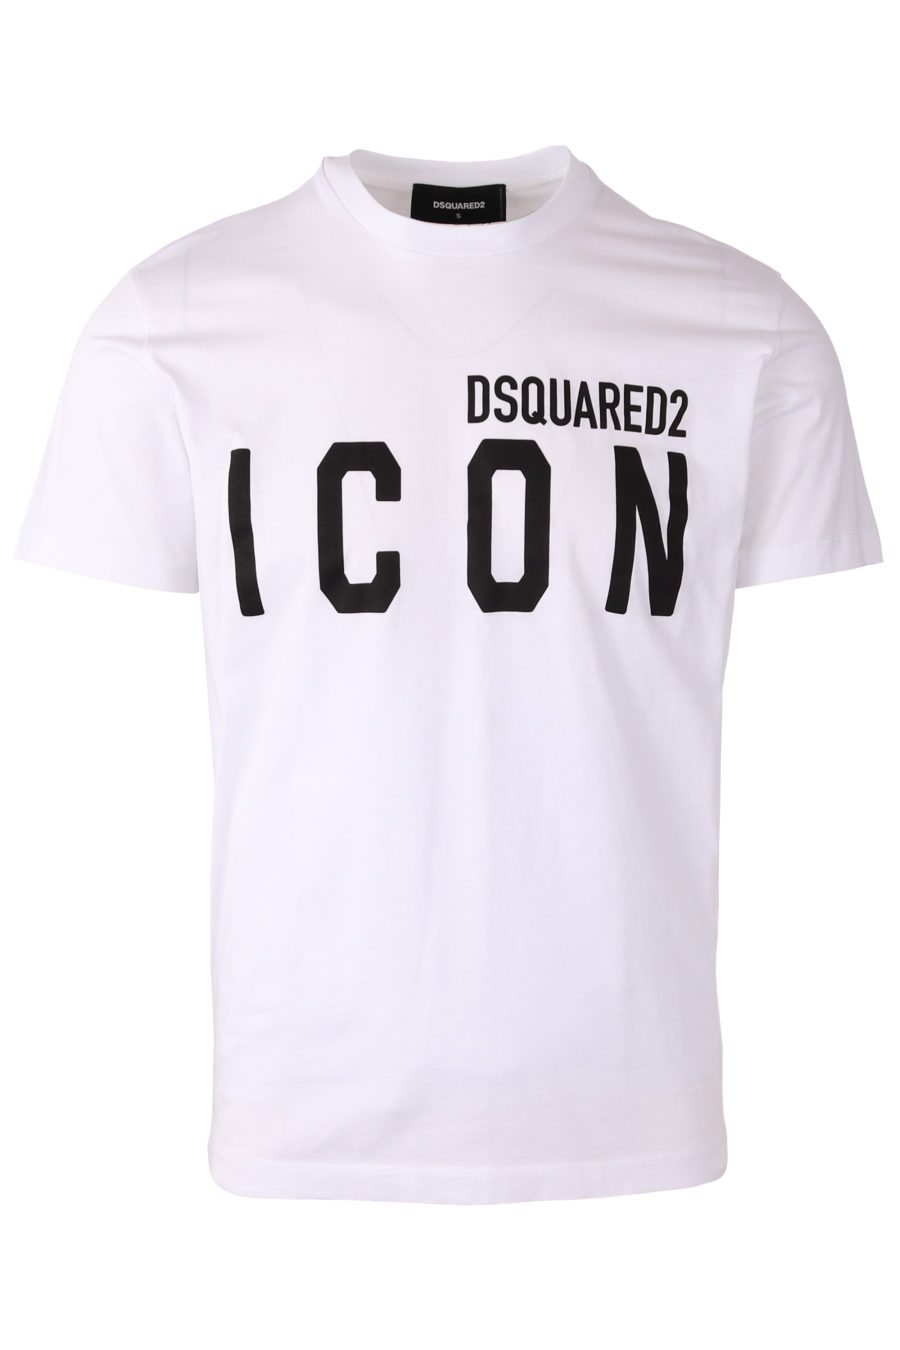 Camiseta blanca con logotipo "Icon" - b750607aee91837ce972d9f17babc38696615967